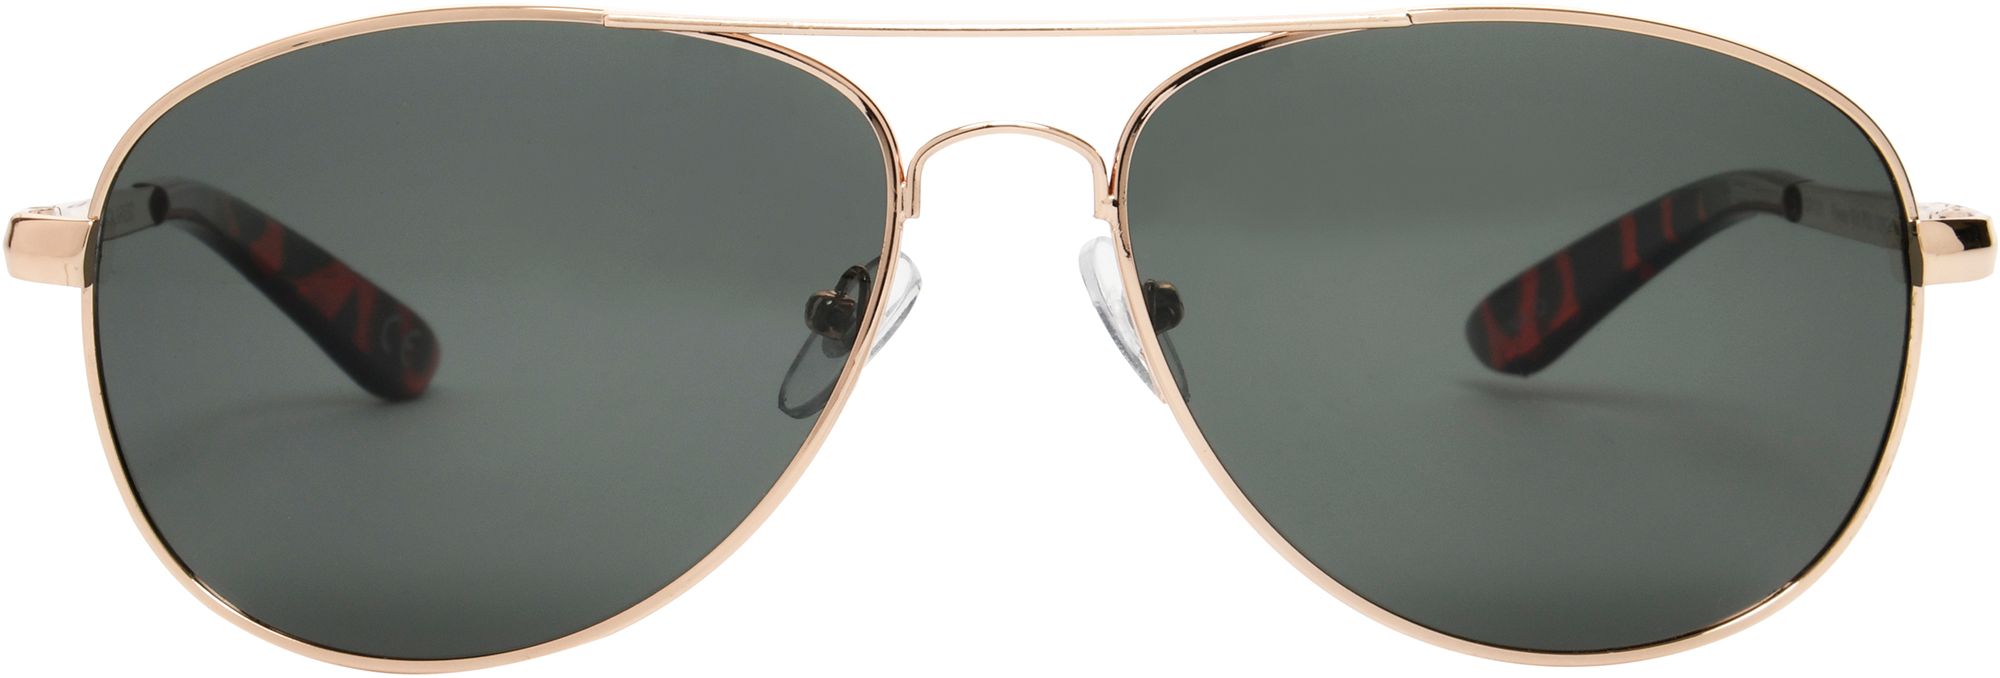 DSG Aviator Polarized Sunglasses